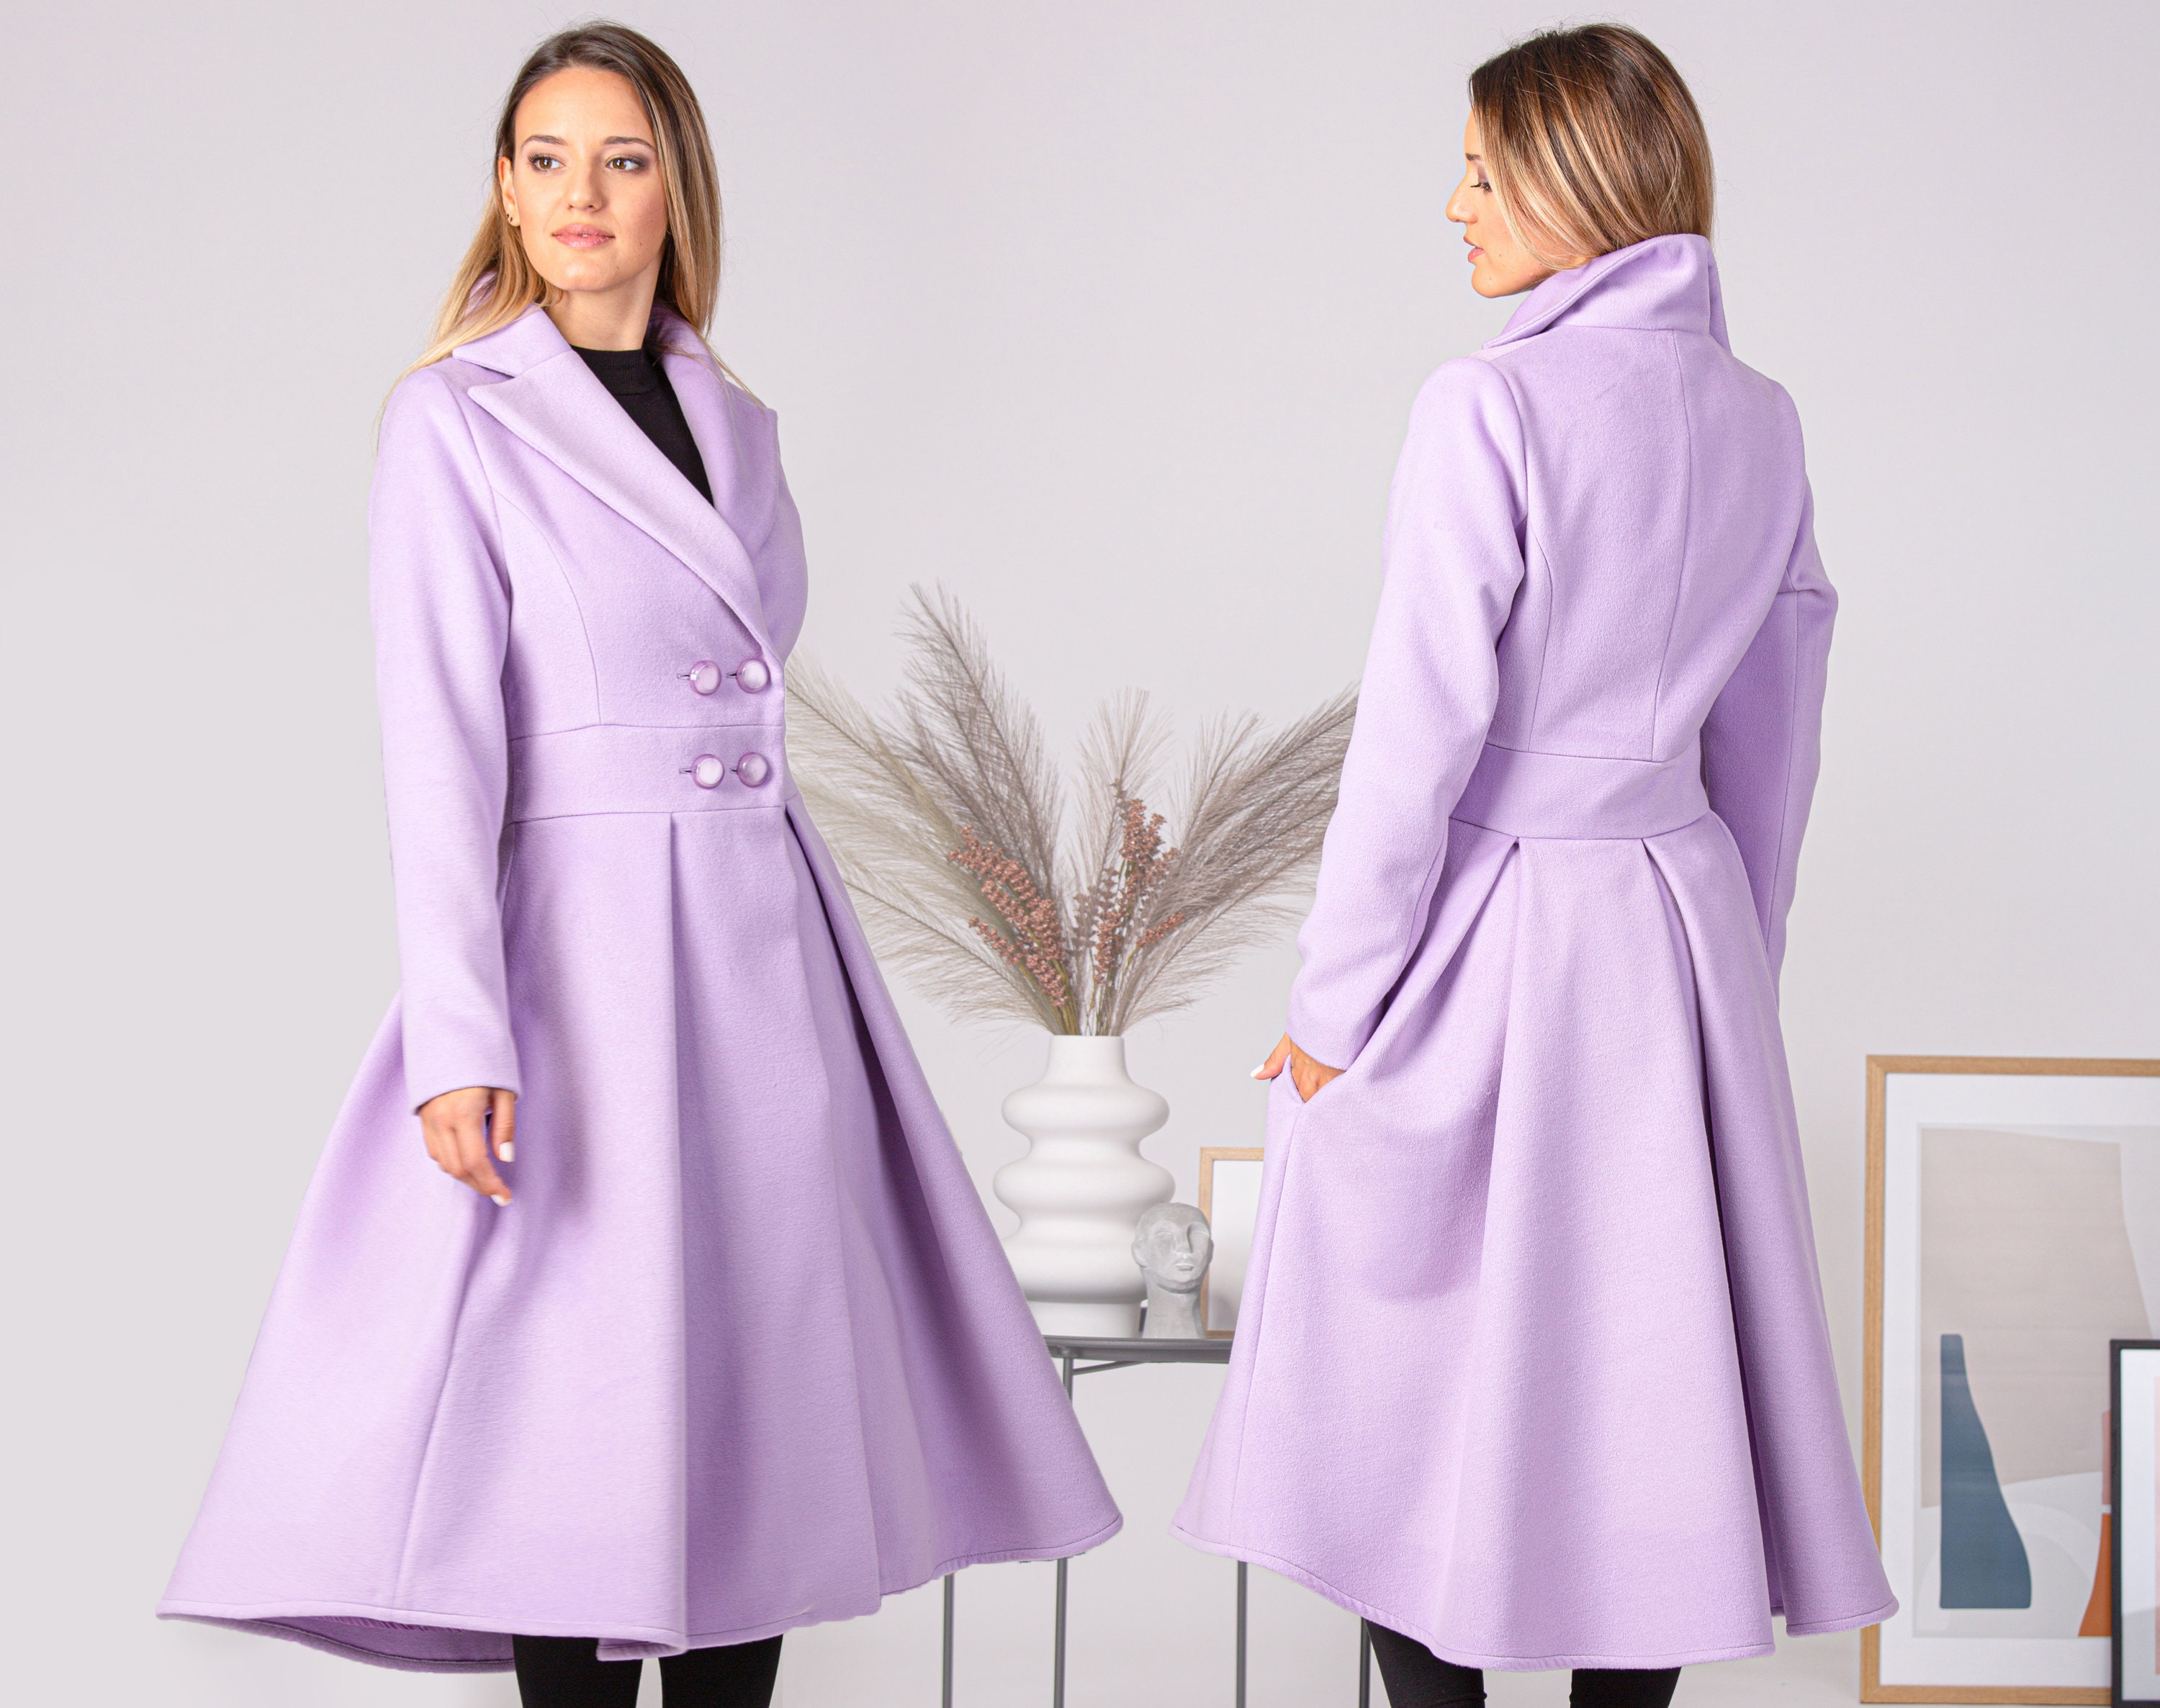 women’s plus size dress coats